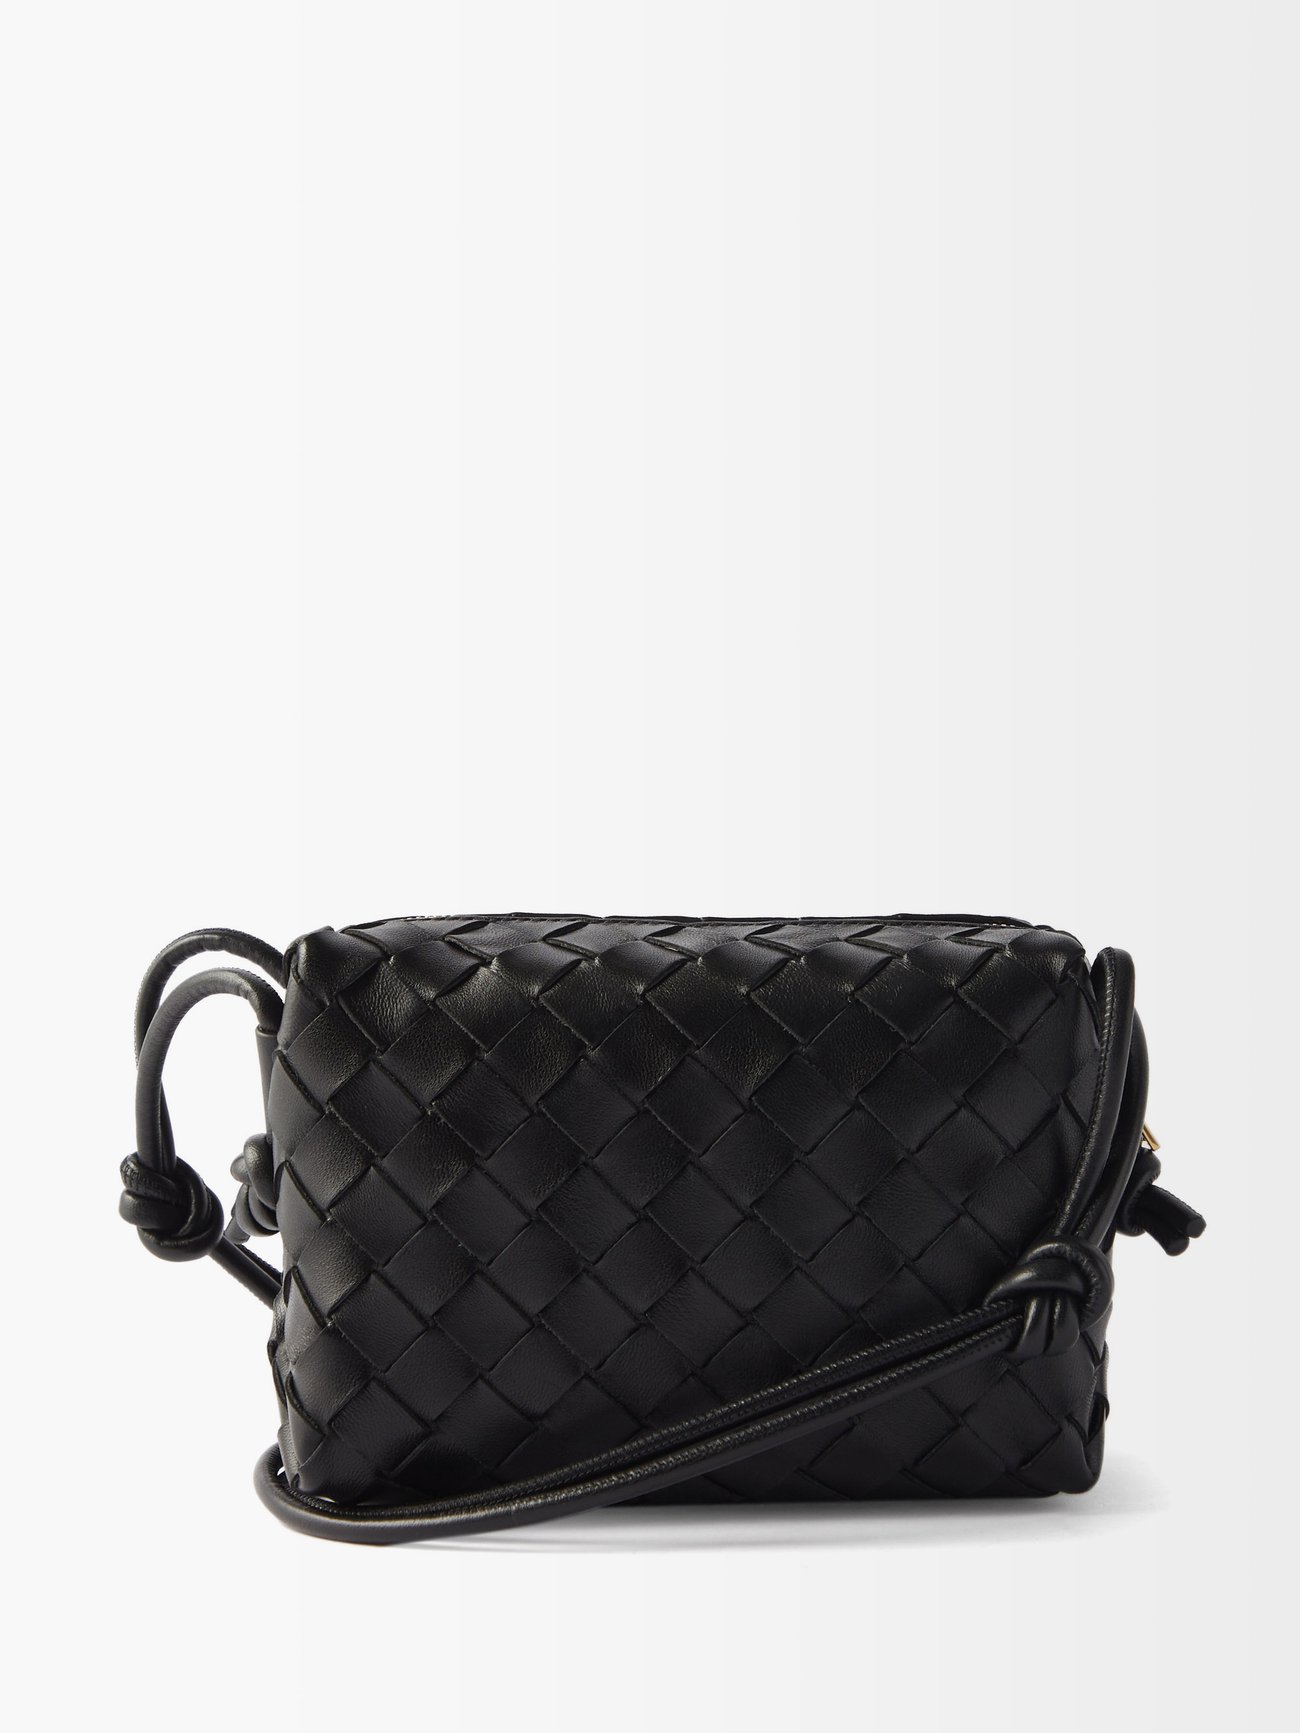 Bottega Veneta Mini Loop Black Leather Shoulder Bag New